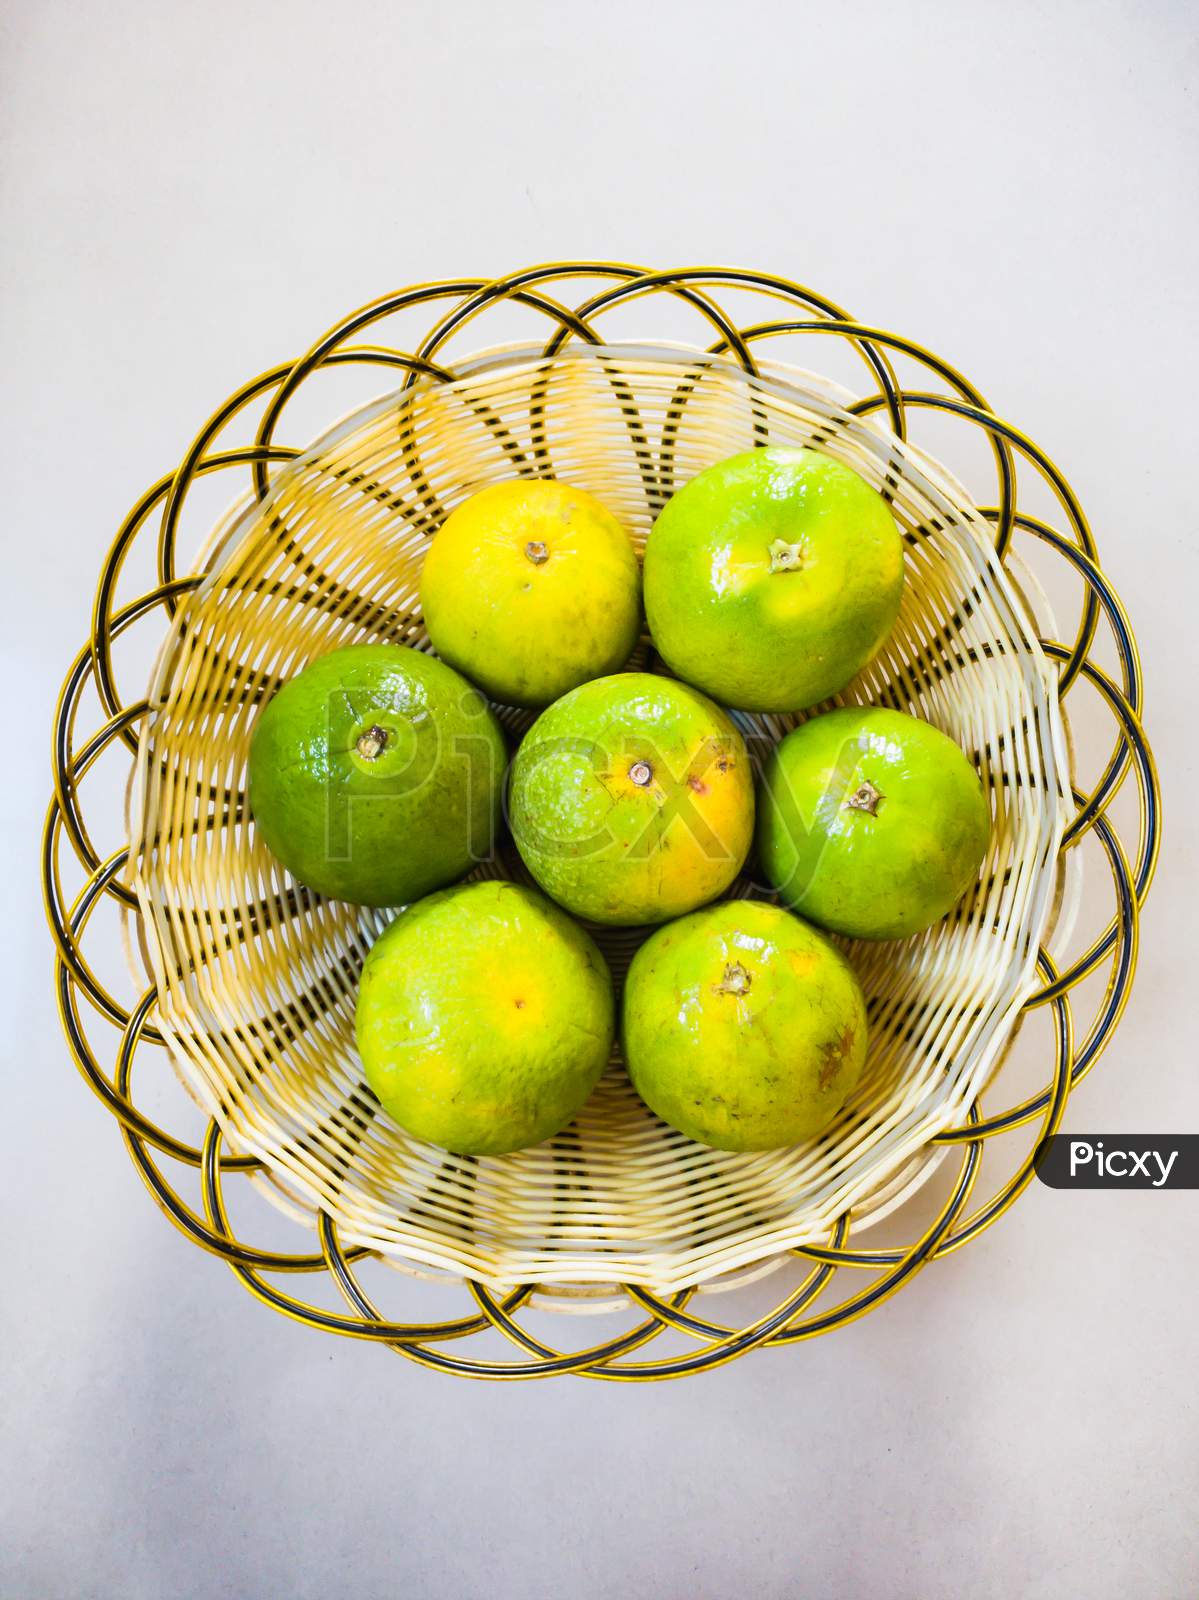 Beautiful mosambis in the fruit basket.